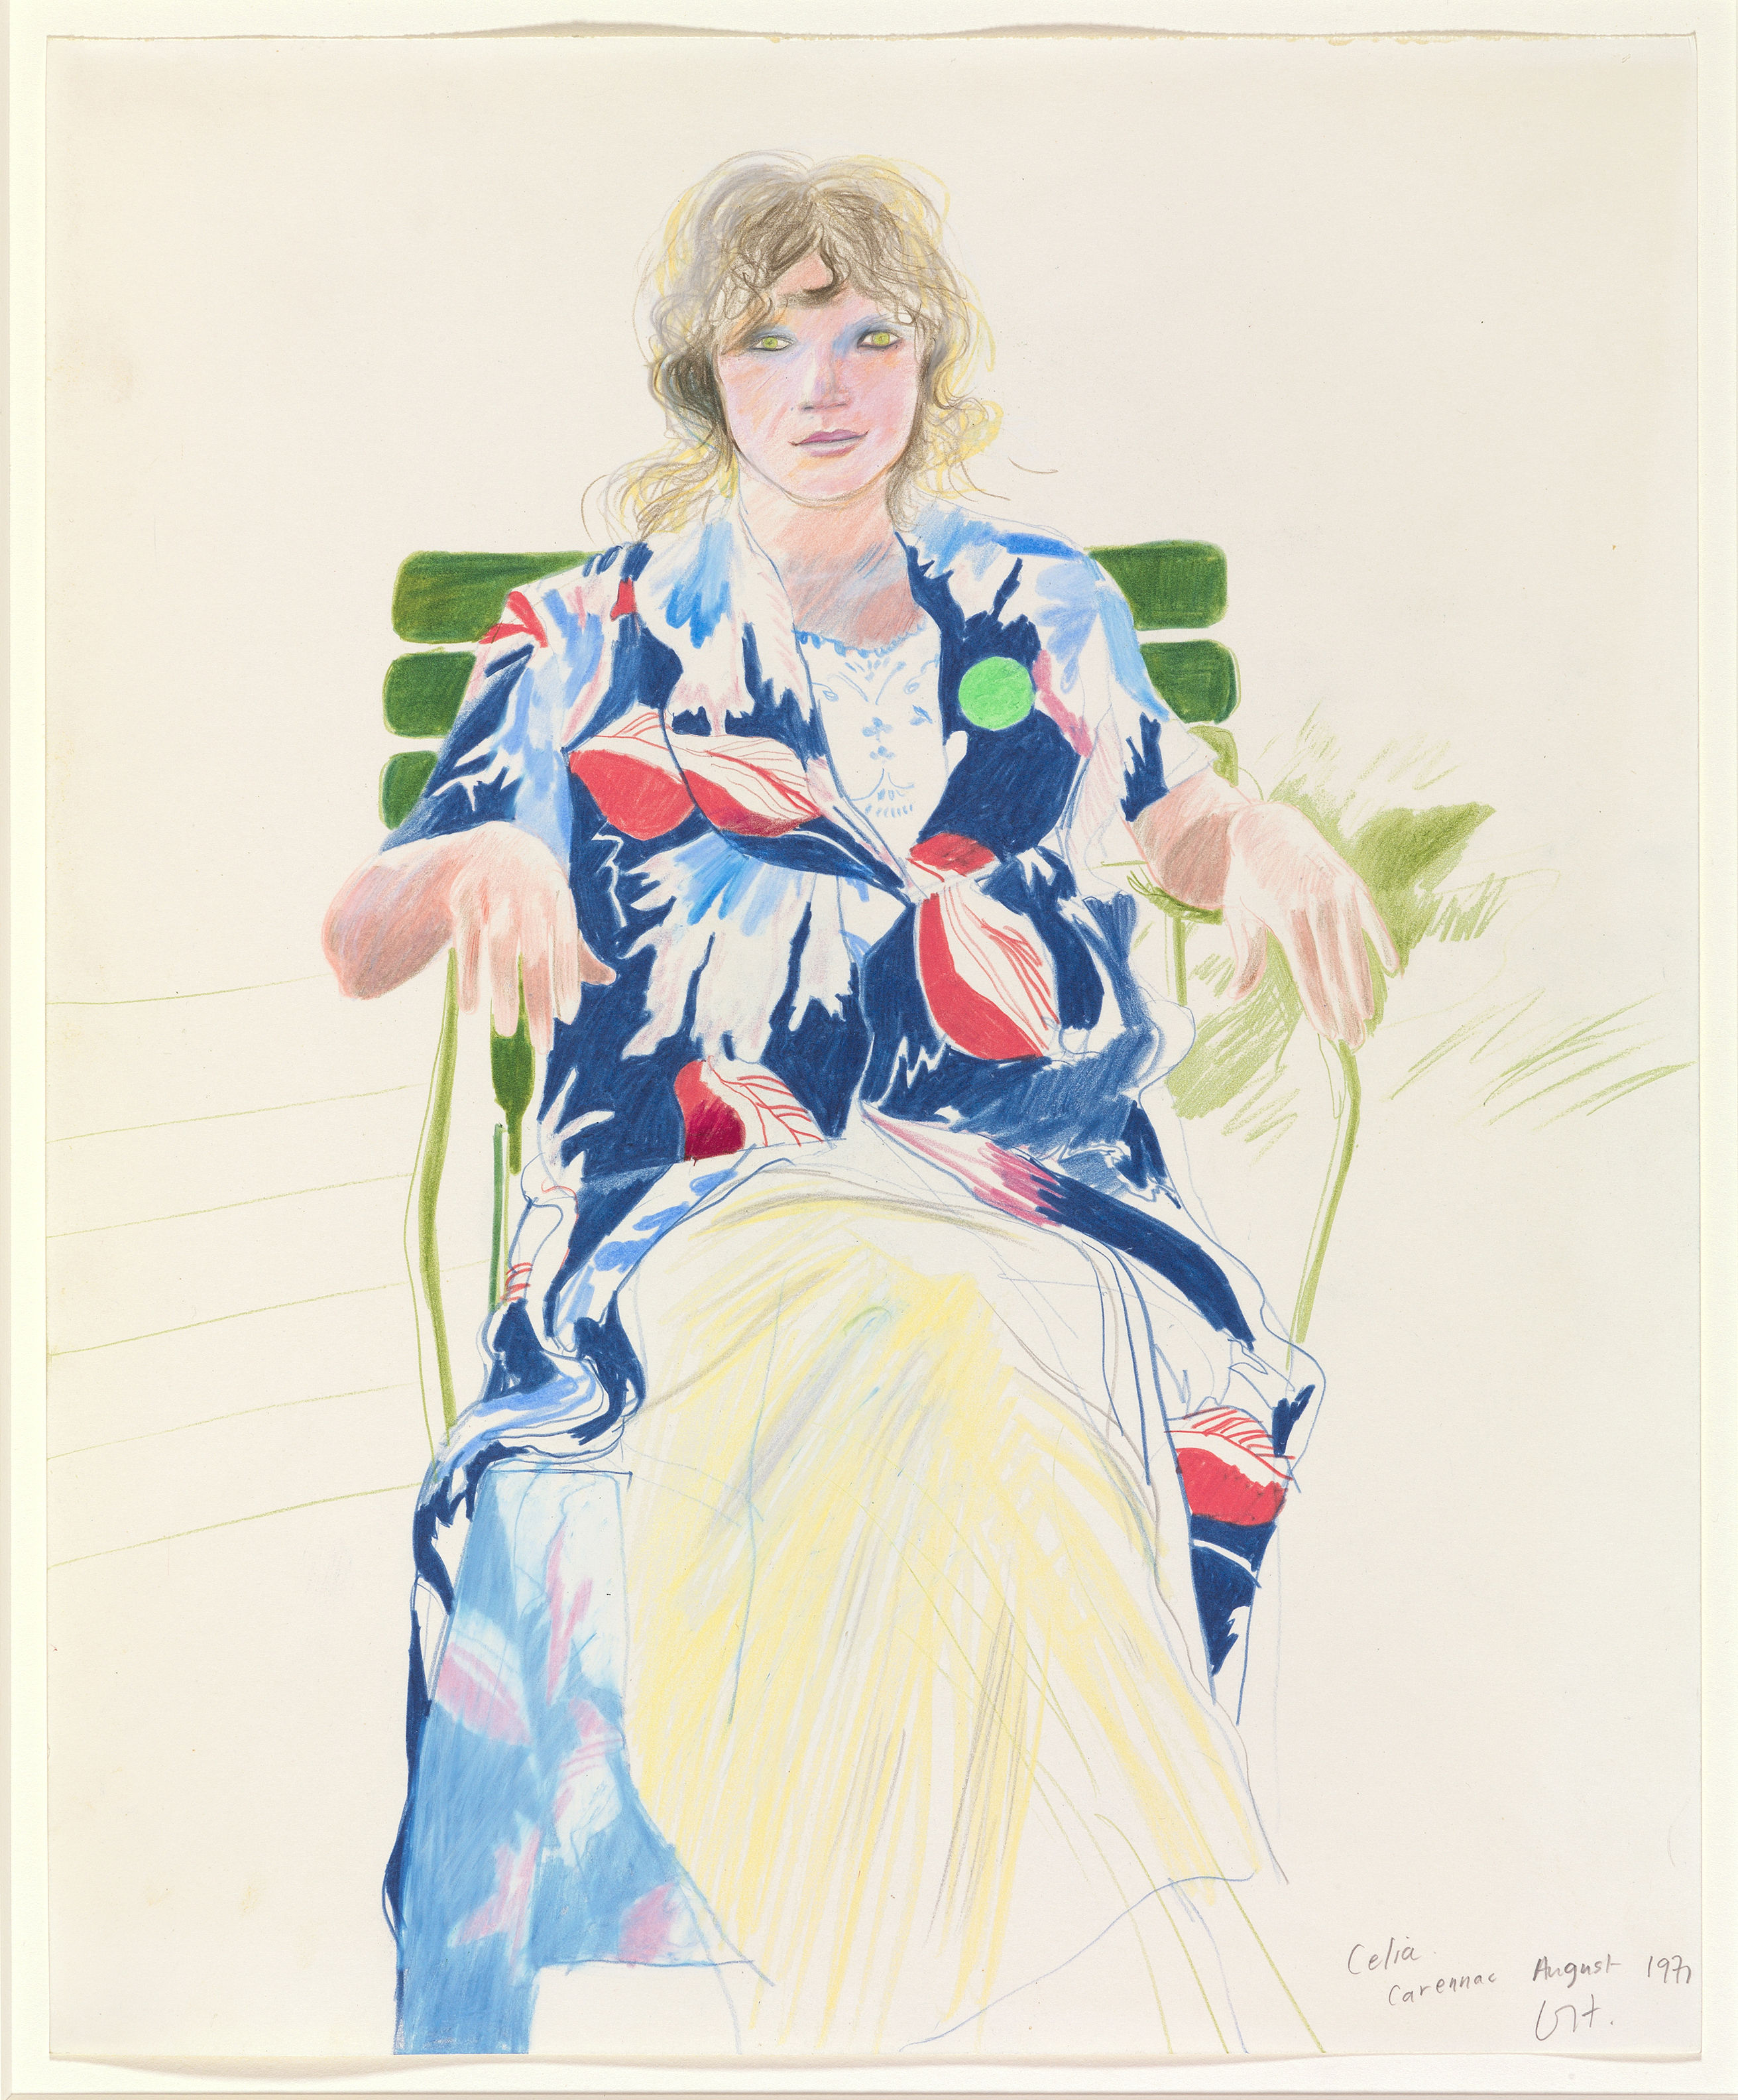 Celia Carennac August 1971, by David Hockney, (Richard Schmidt/David Hockney/PA)